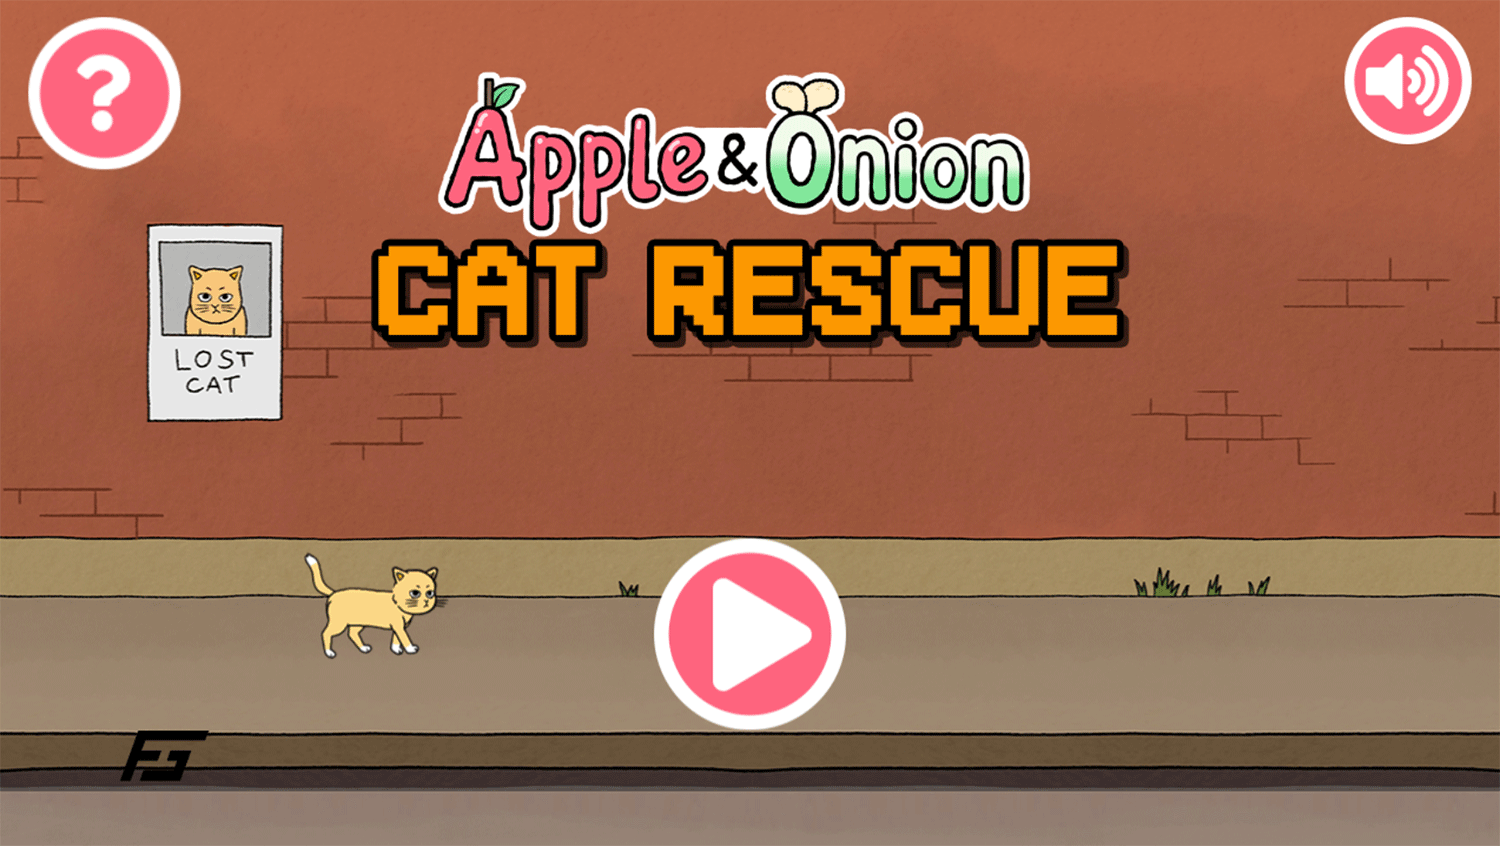 Apple & Onion Cat Rescue Game Welcome Screen Screenshot.